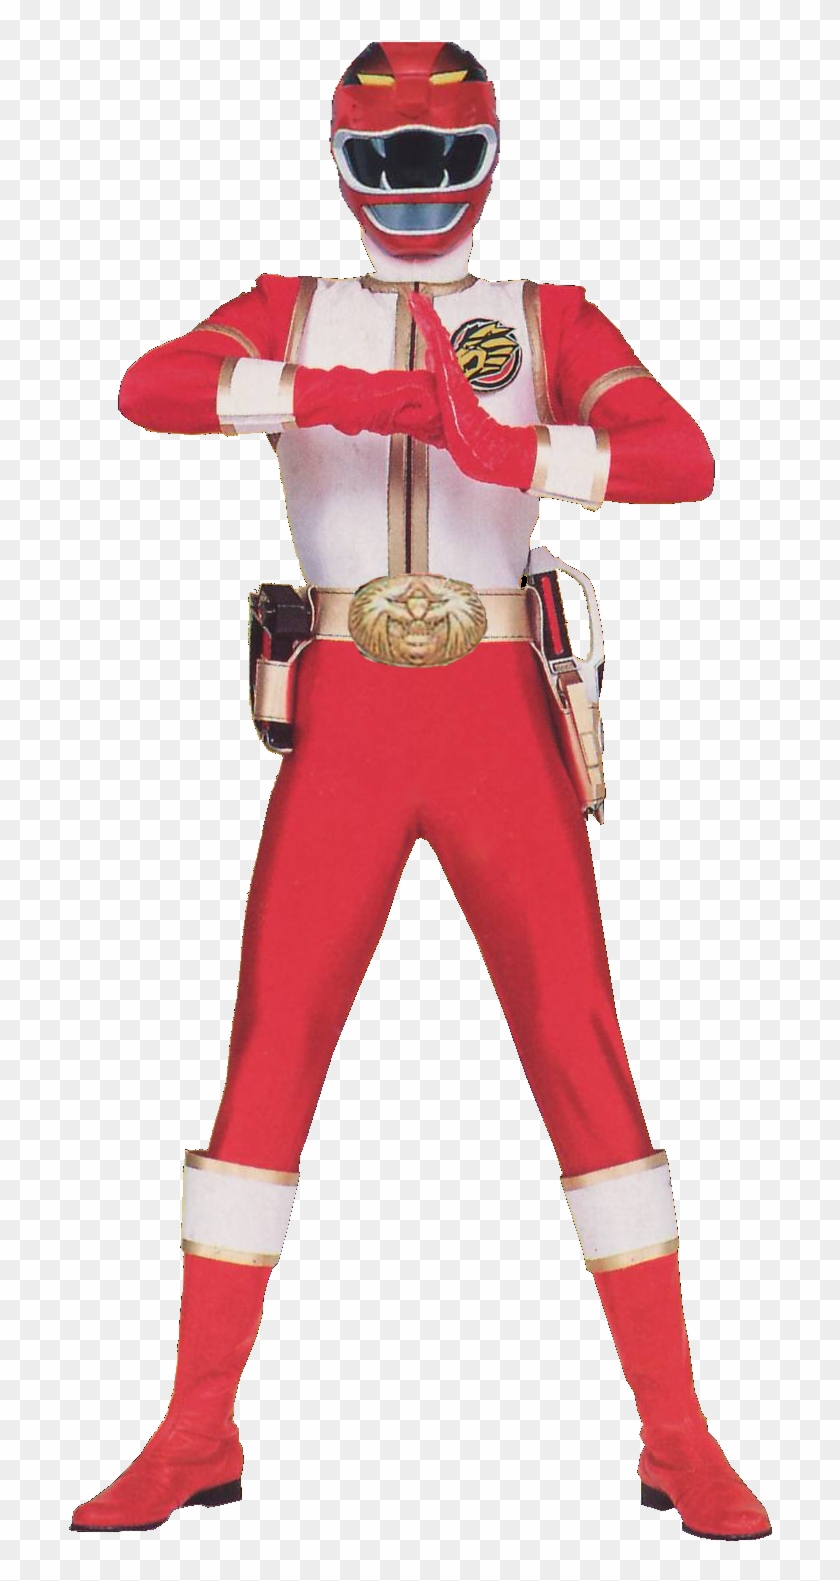 Red Wild Force Z Ranger - Red Power Ranger Png Clipart #223337